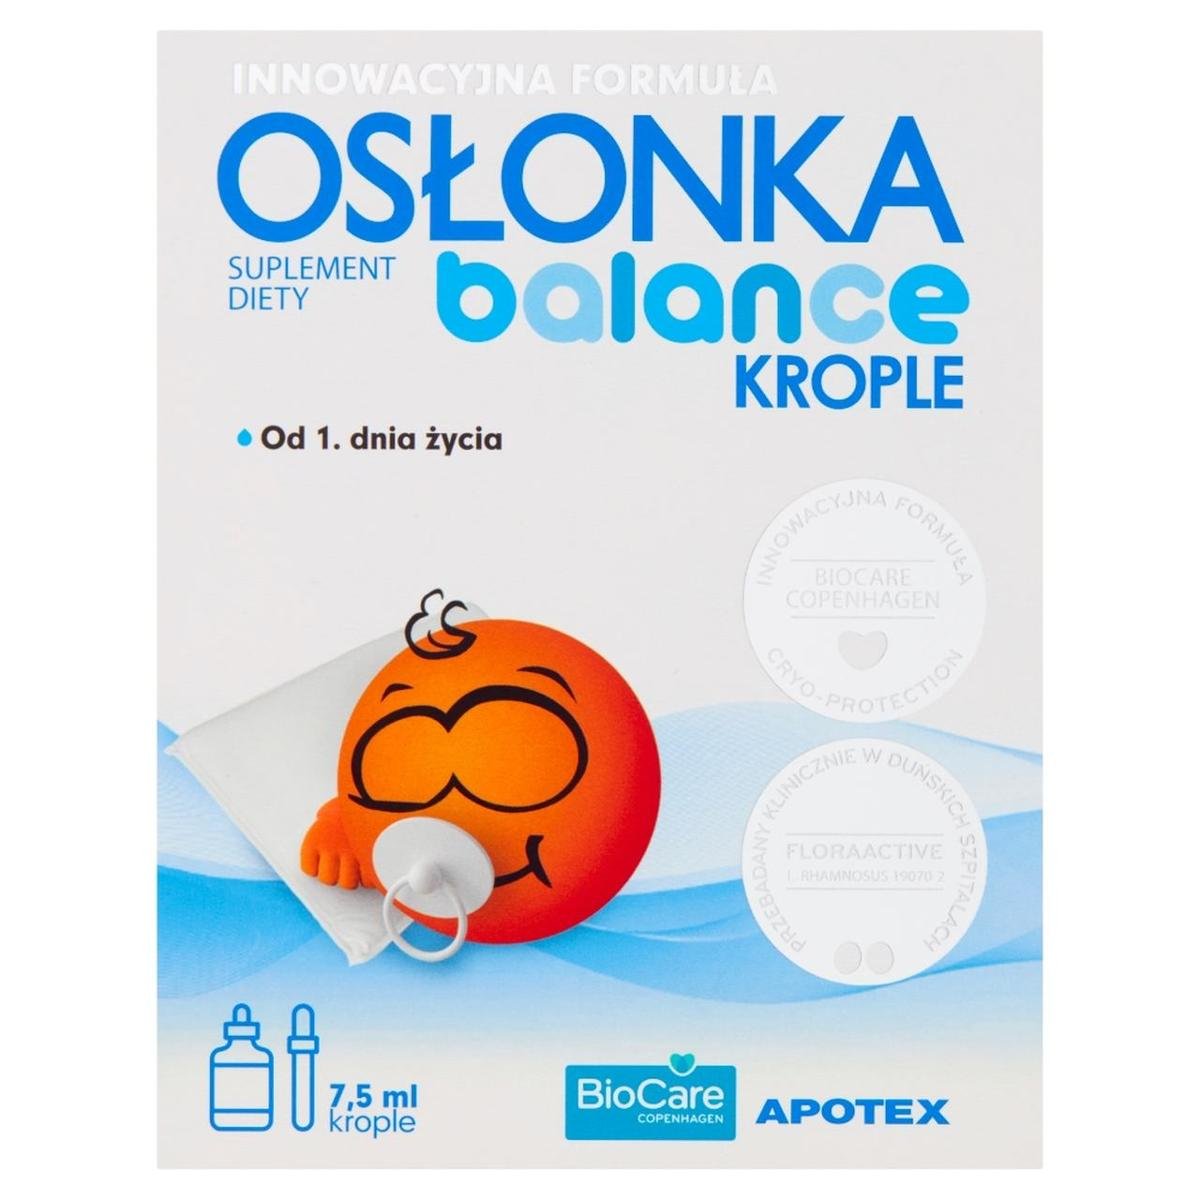 Apotex NEDERLAND B.V Osłonka Balance krople 7,5 ml